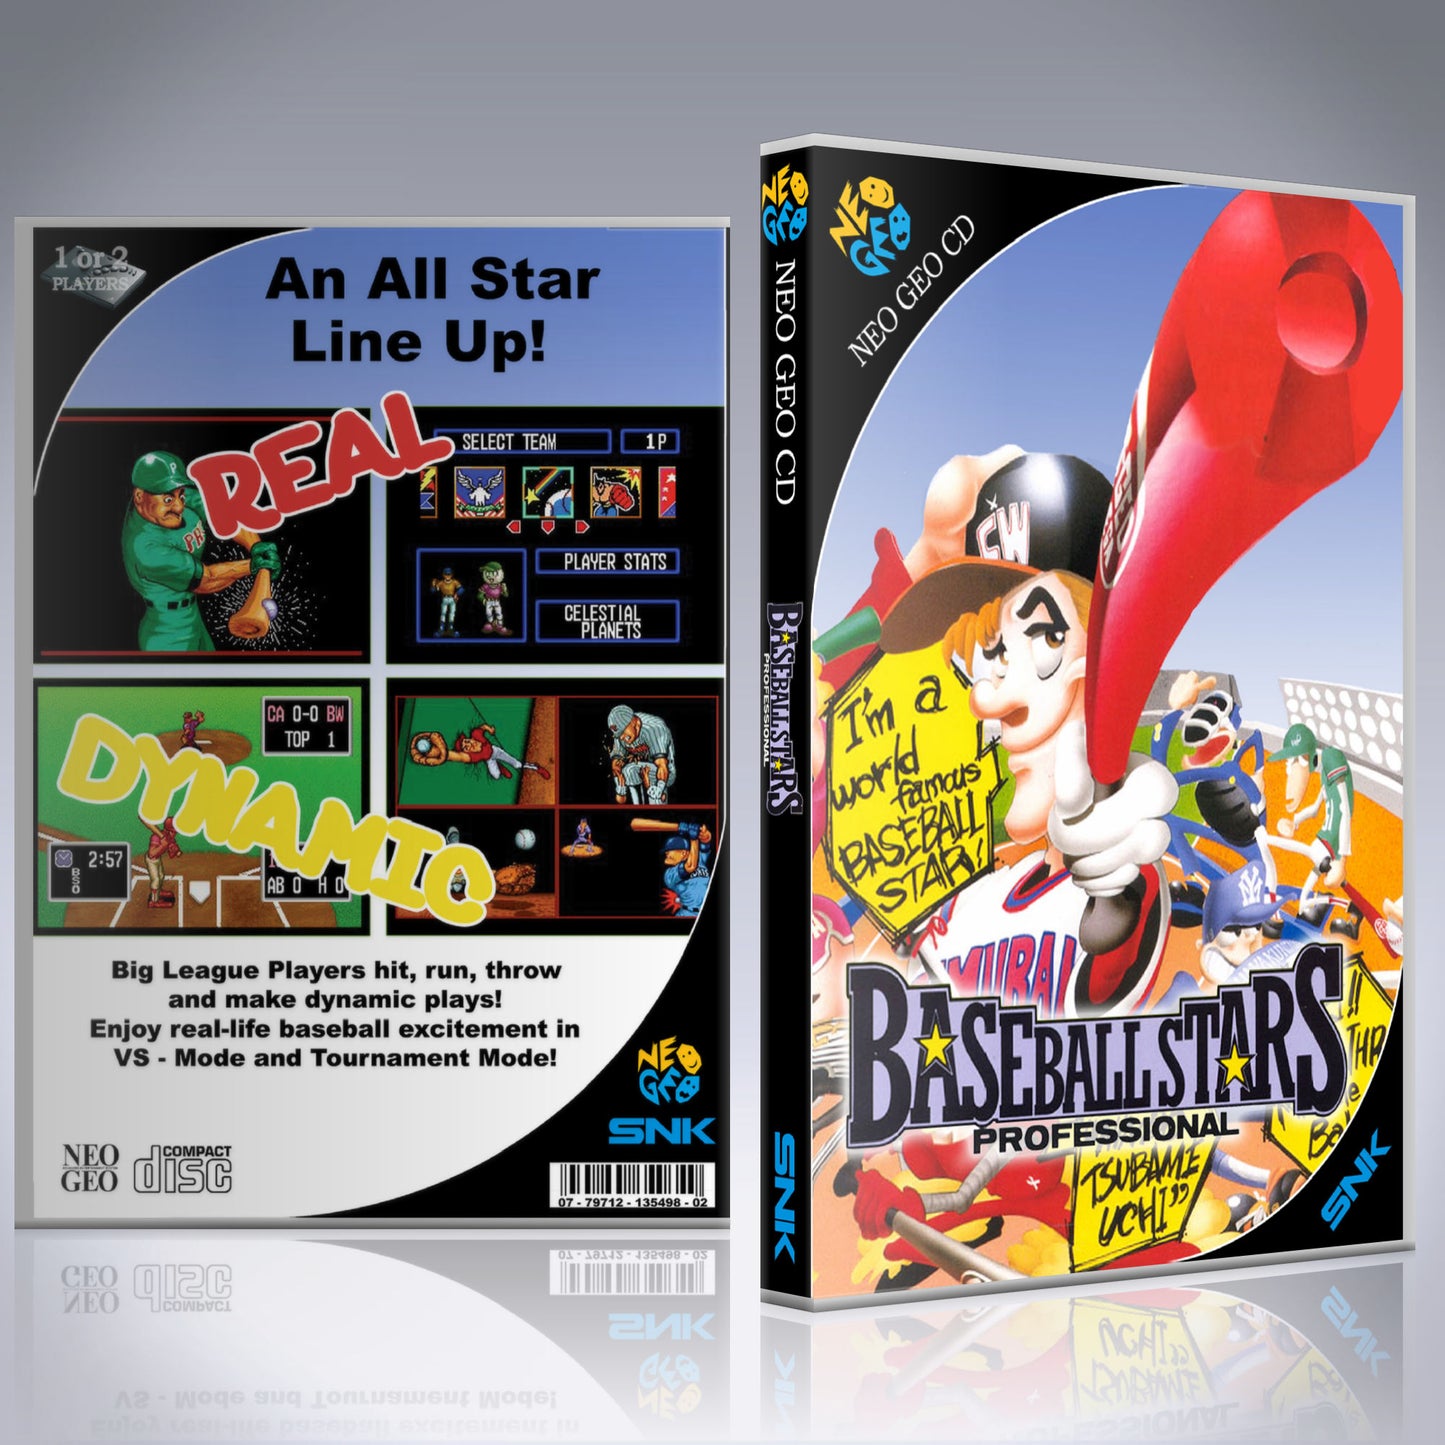 NeoGeo CD Custom Case - NO GAME - Baseball Stars Professional